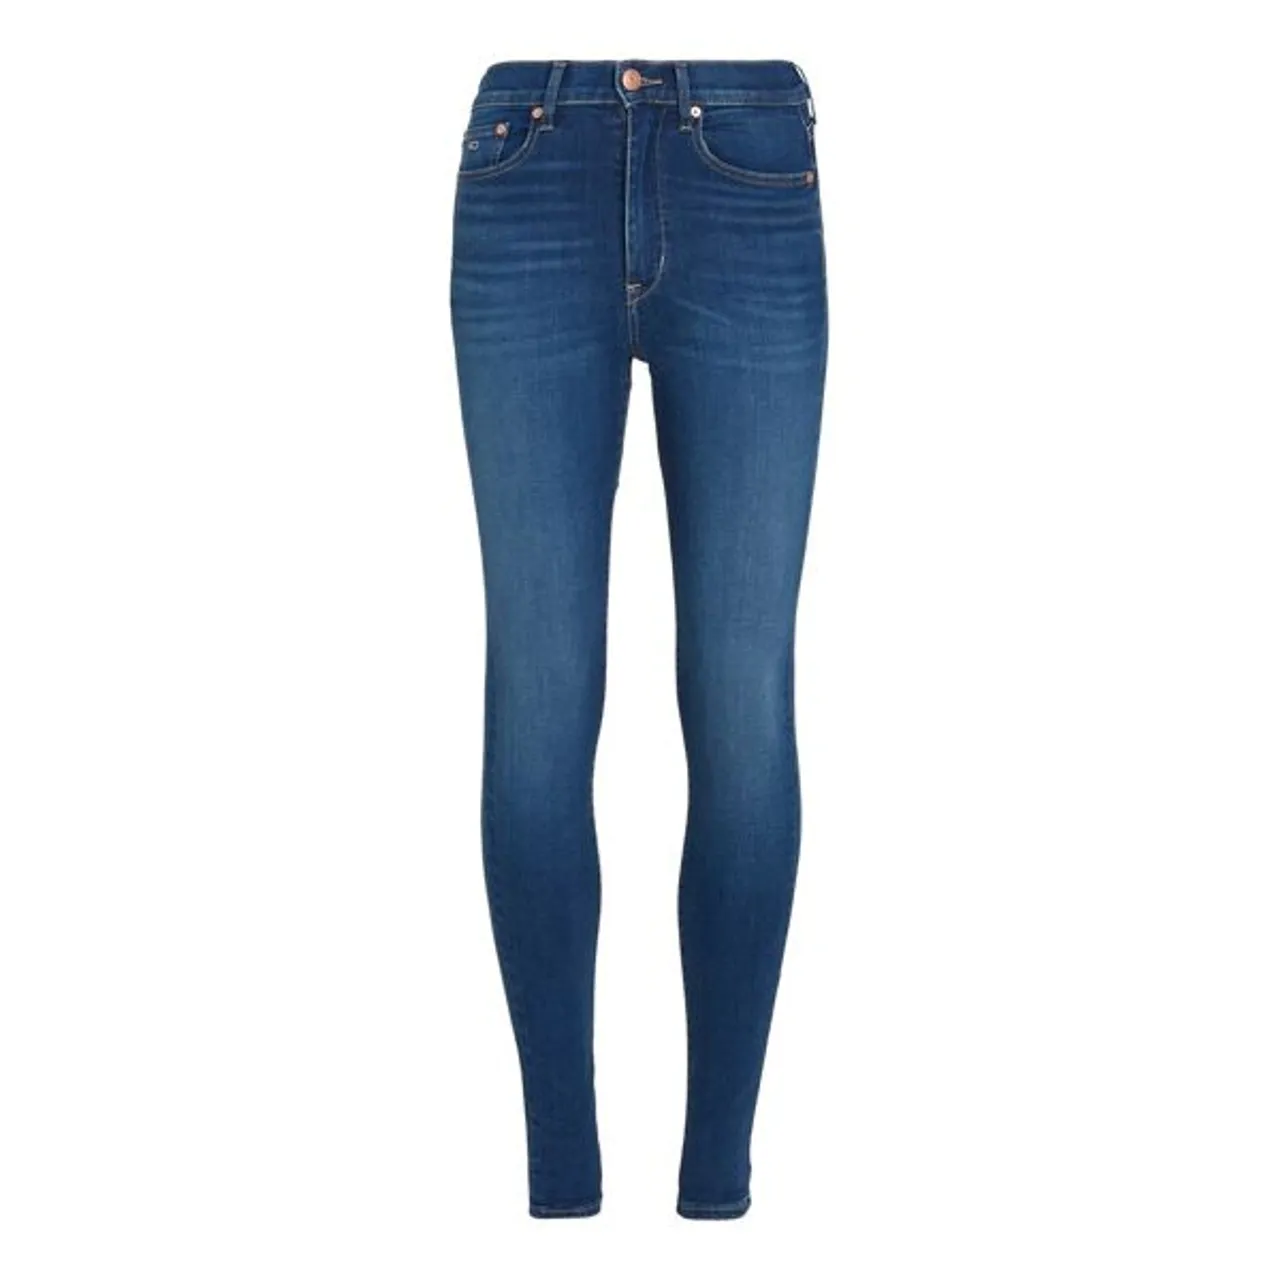 Bequeme Jeans TOMMY JEANS "Sylvia Skinny Slim Hohe Leibhöhe" Gr. 27, Länge 32, blau (denim medium1) Damen Jeans High-Waist-Jeans